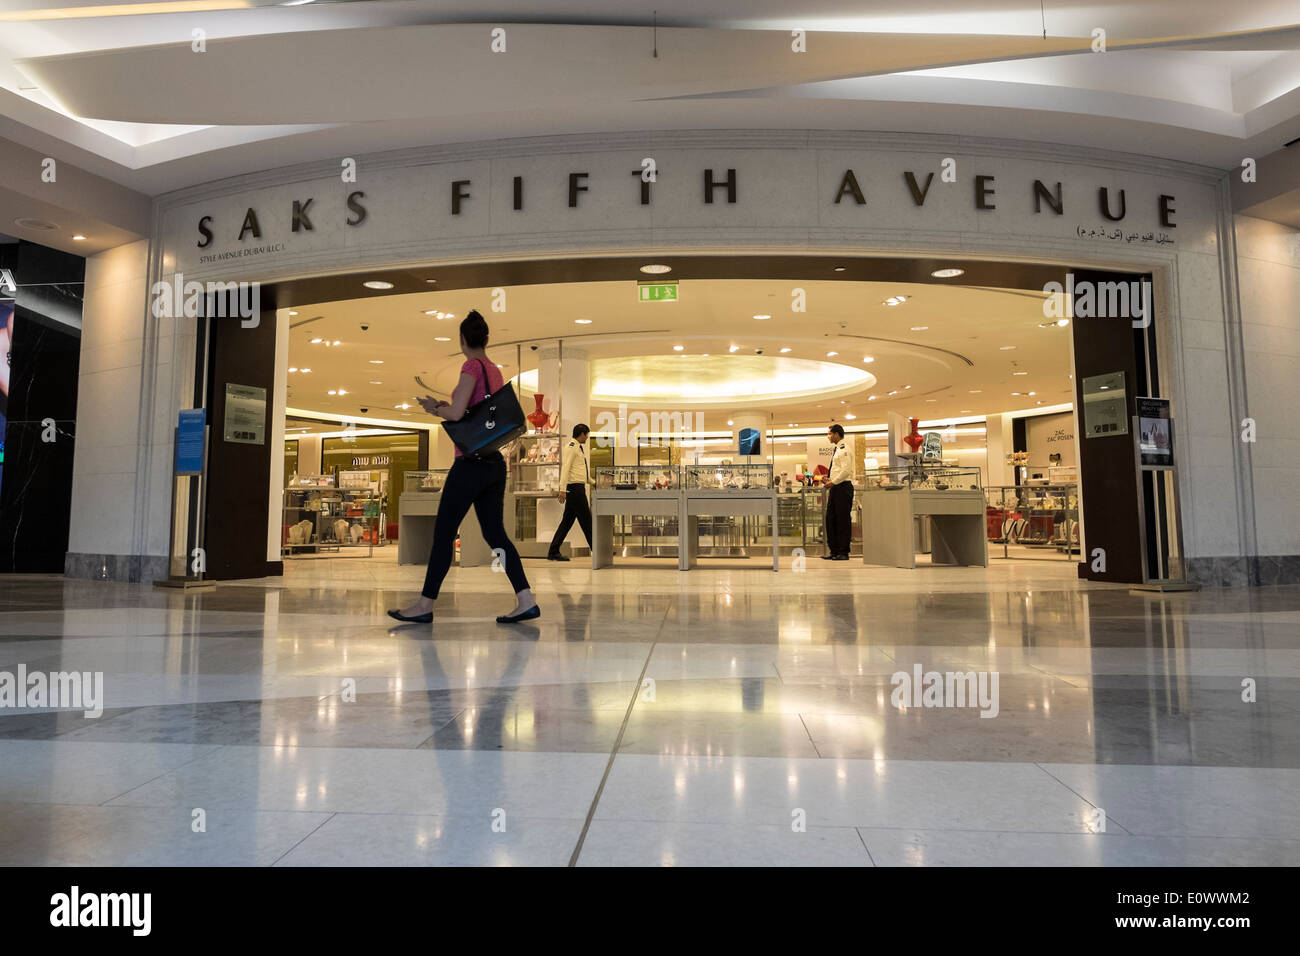 Saks Fifth Avenue store en el centro comercial Burjuman en Dubai, Emiratos Árabes Unidos Foto de stock